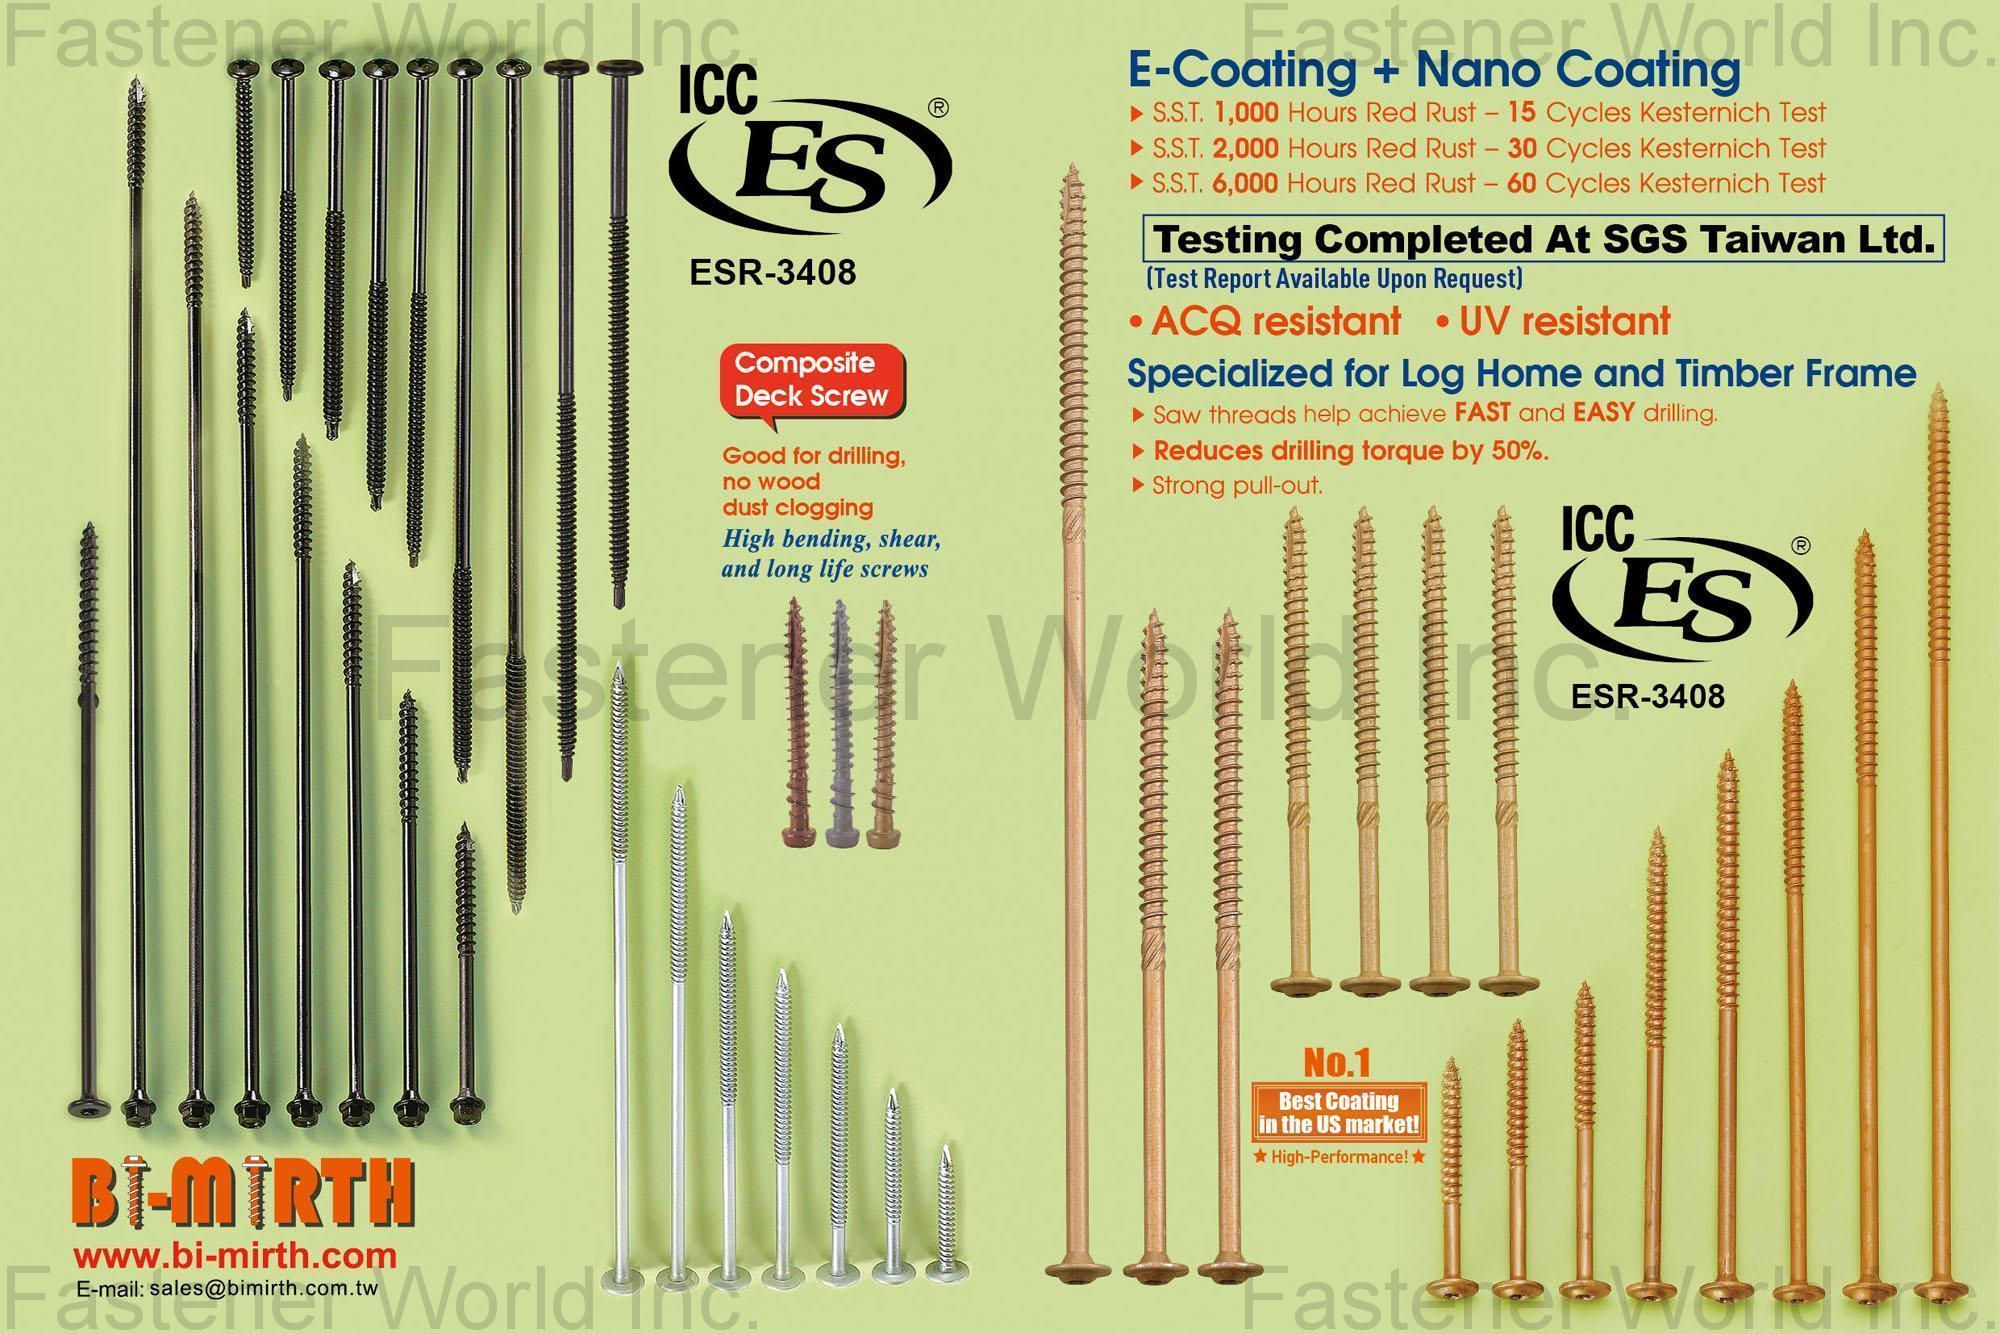 BI-MIRTH CORPORATION , Composite Deck Screws, E-Coating, Nano Coating, Log Home and Timber Frame , ED Coating